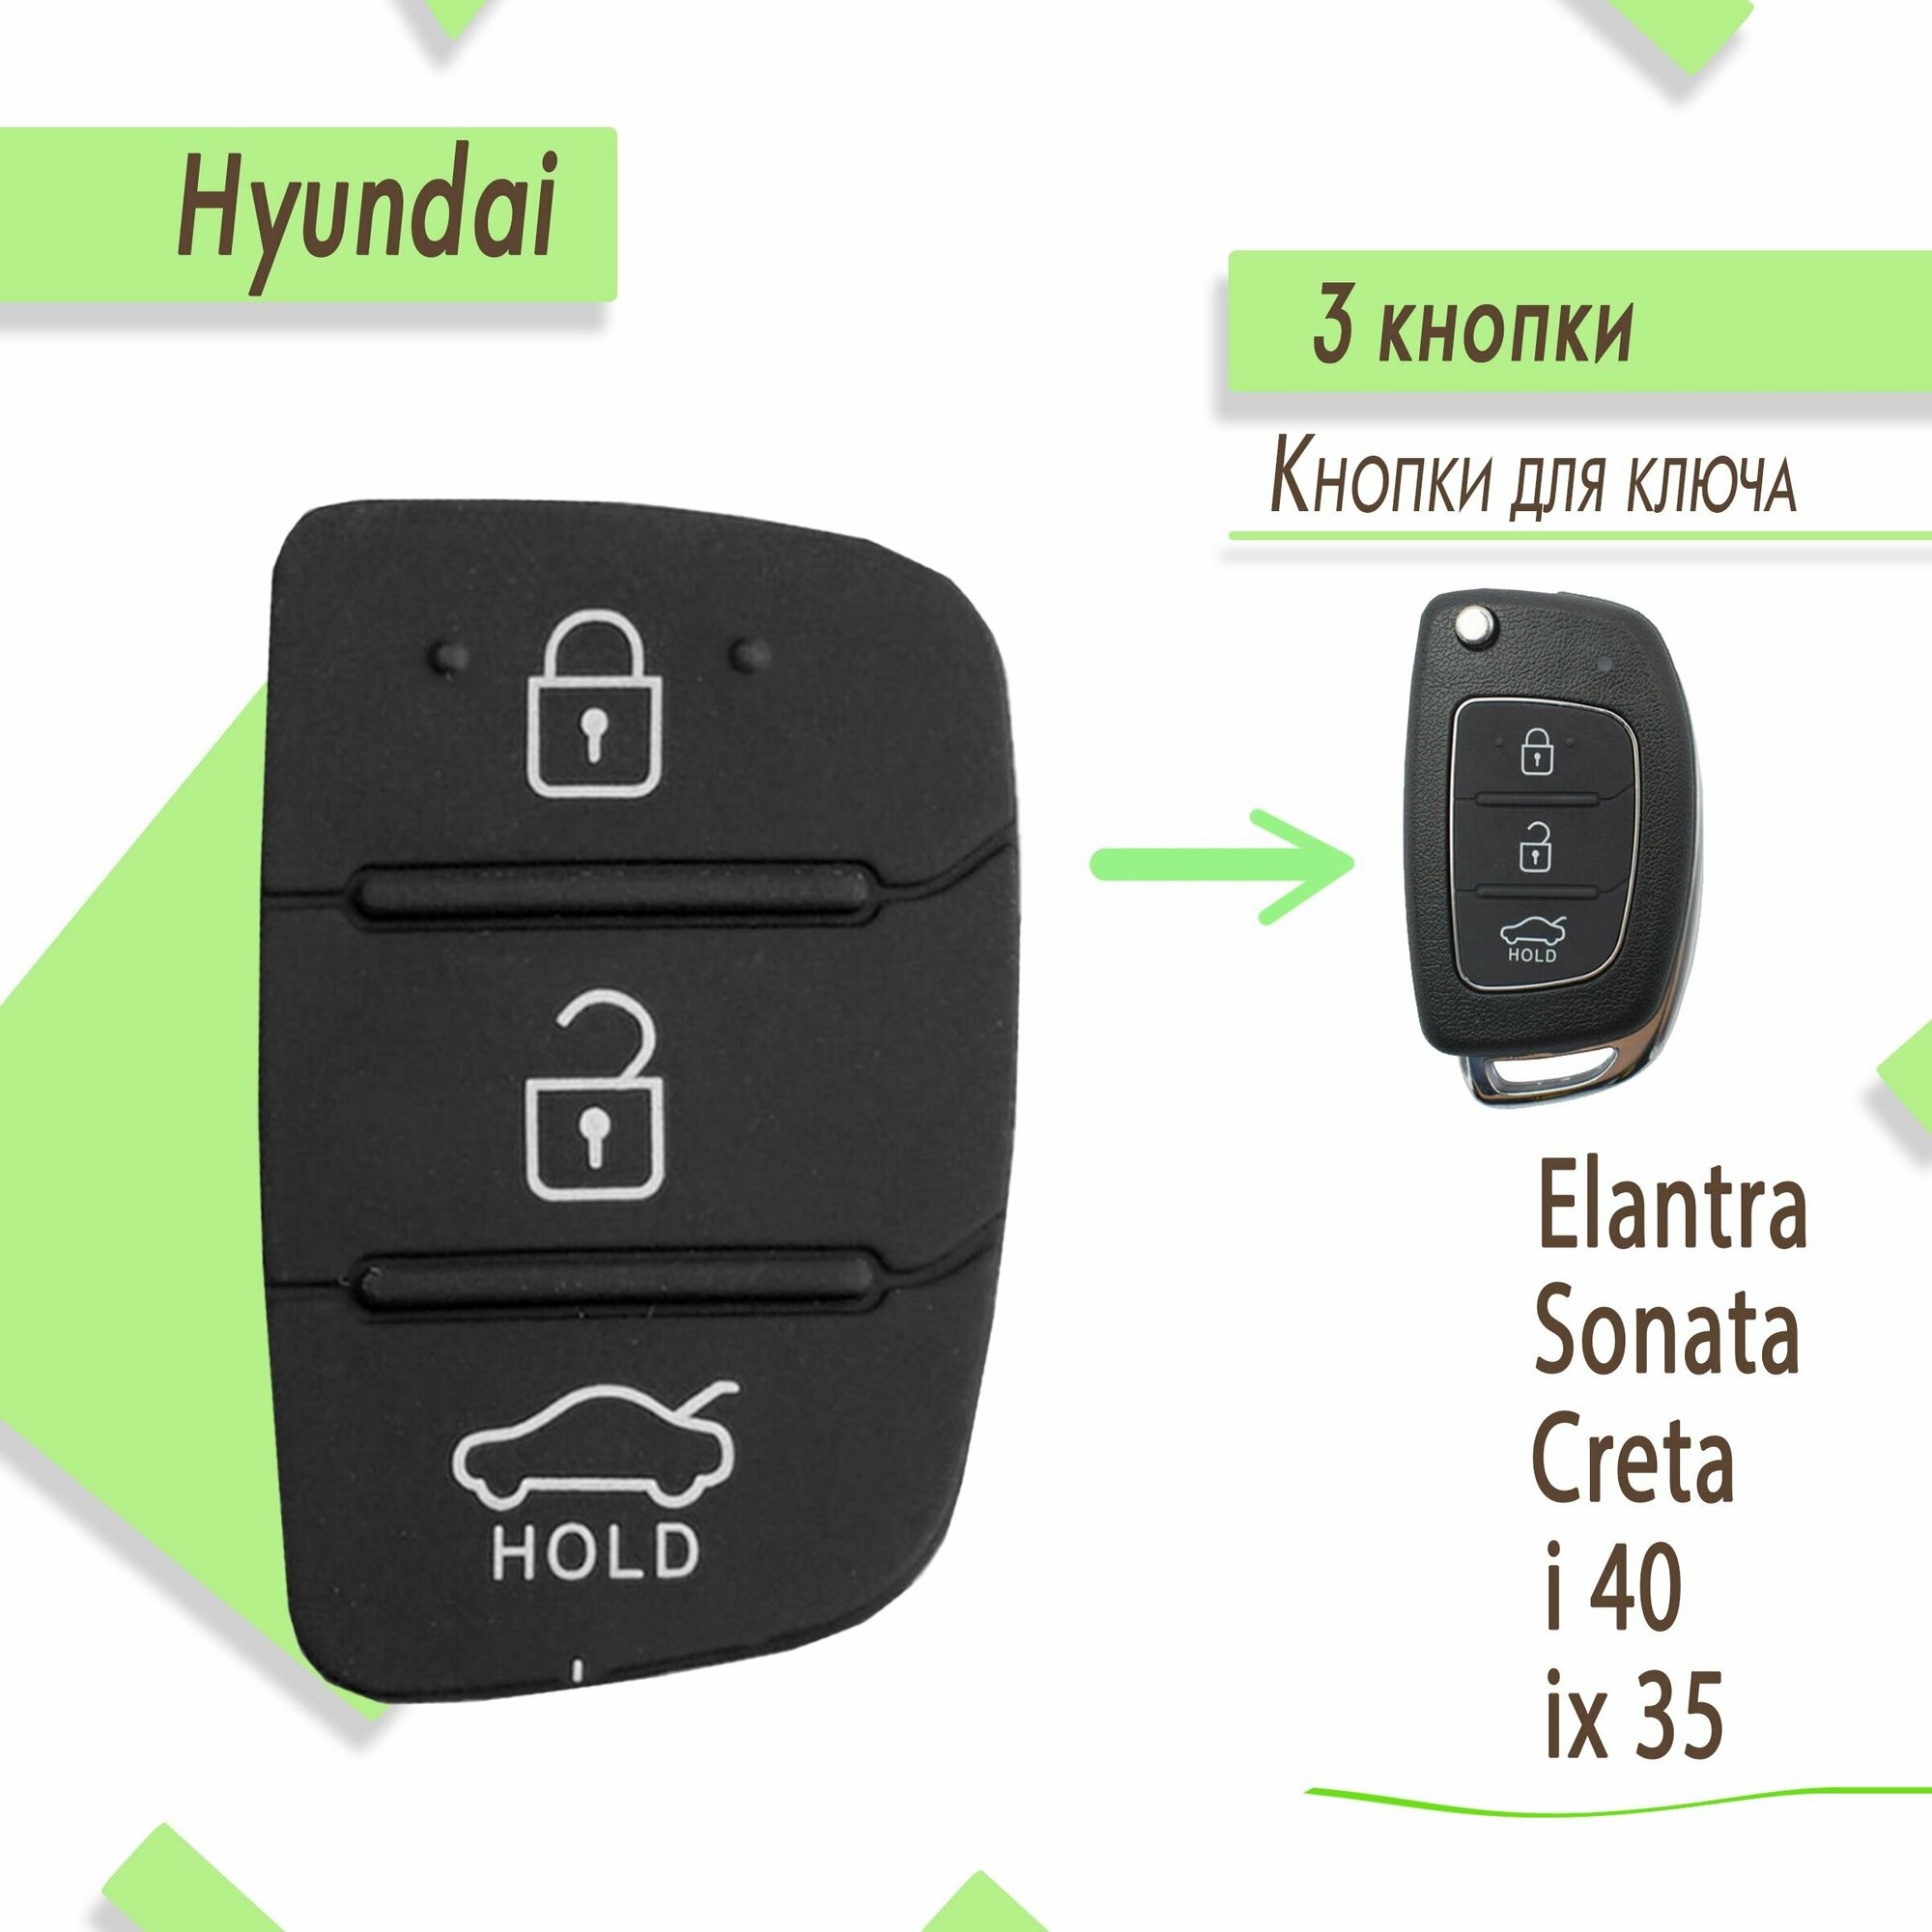 Кнопки для ключа Hyundai Elantra